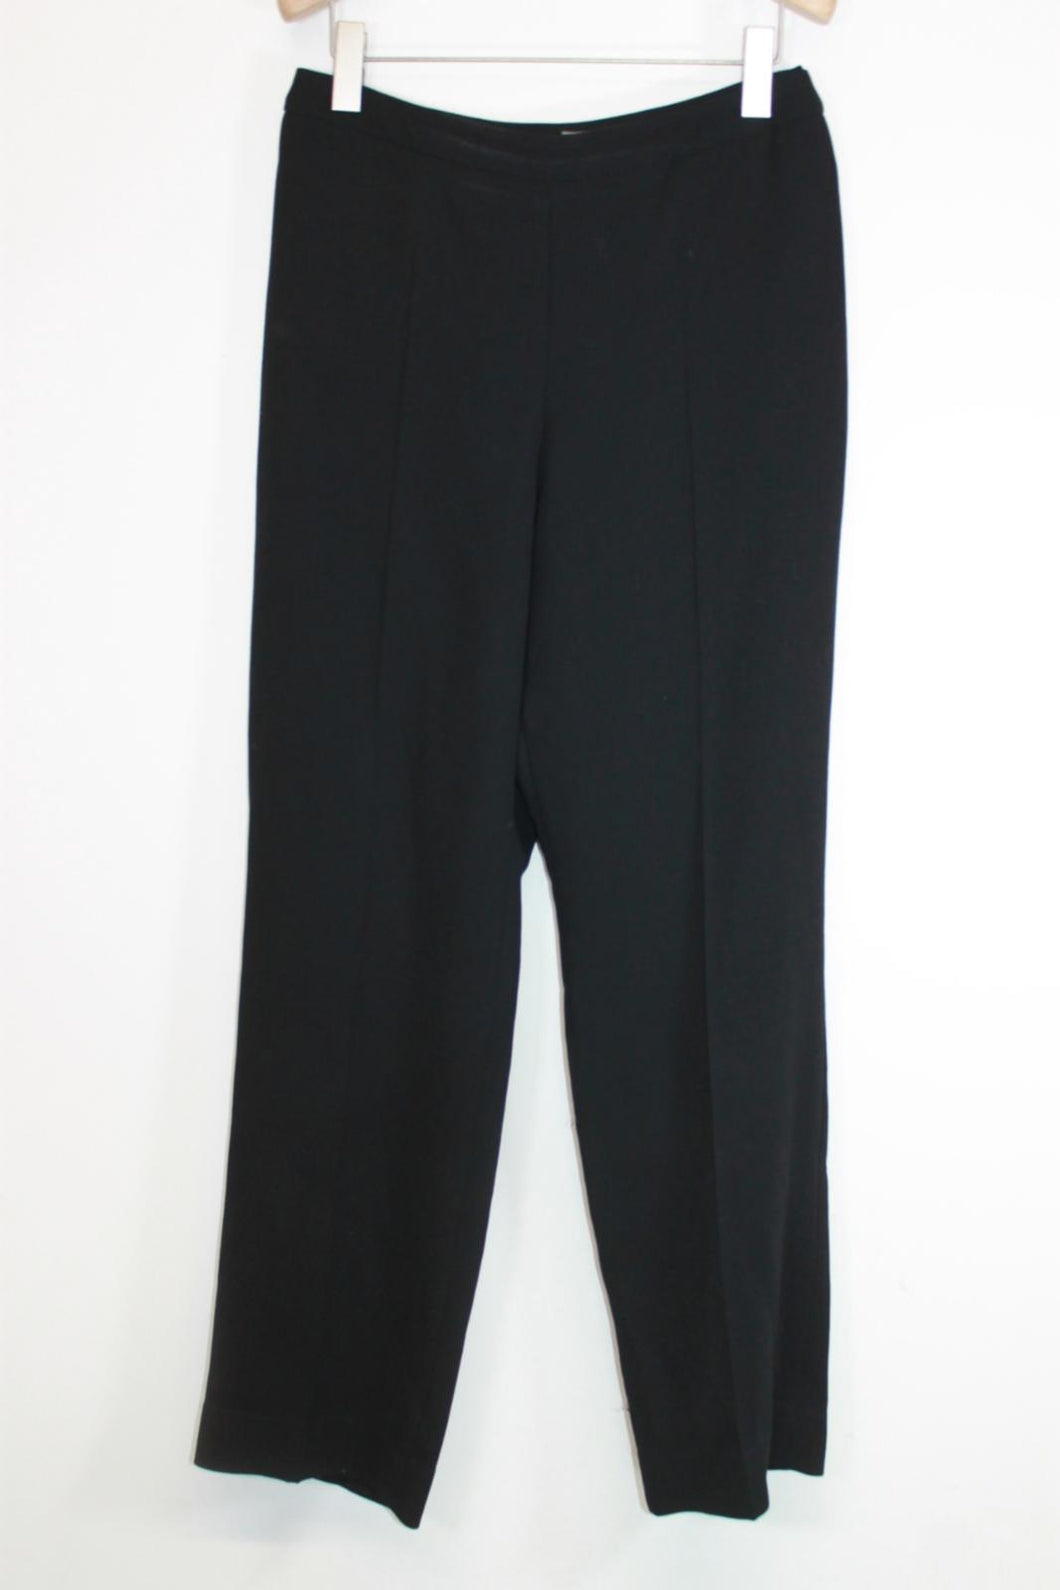 JAEGER Ladies Black Wide-Leg Dress Trousers EU42 UK14